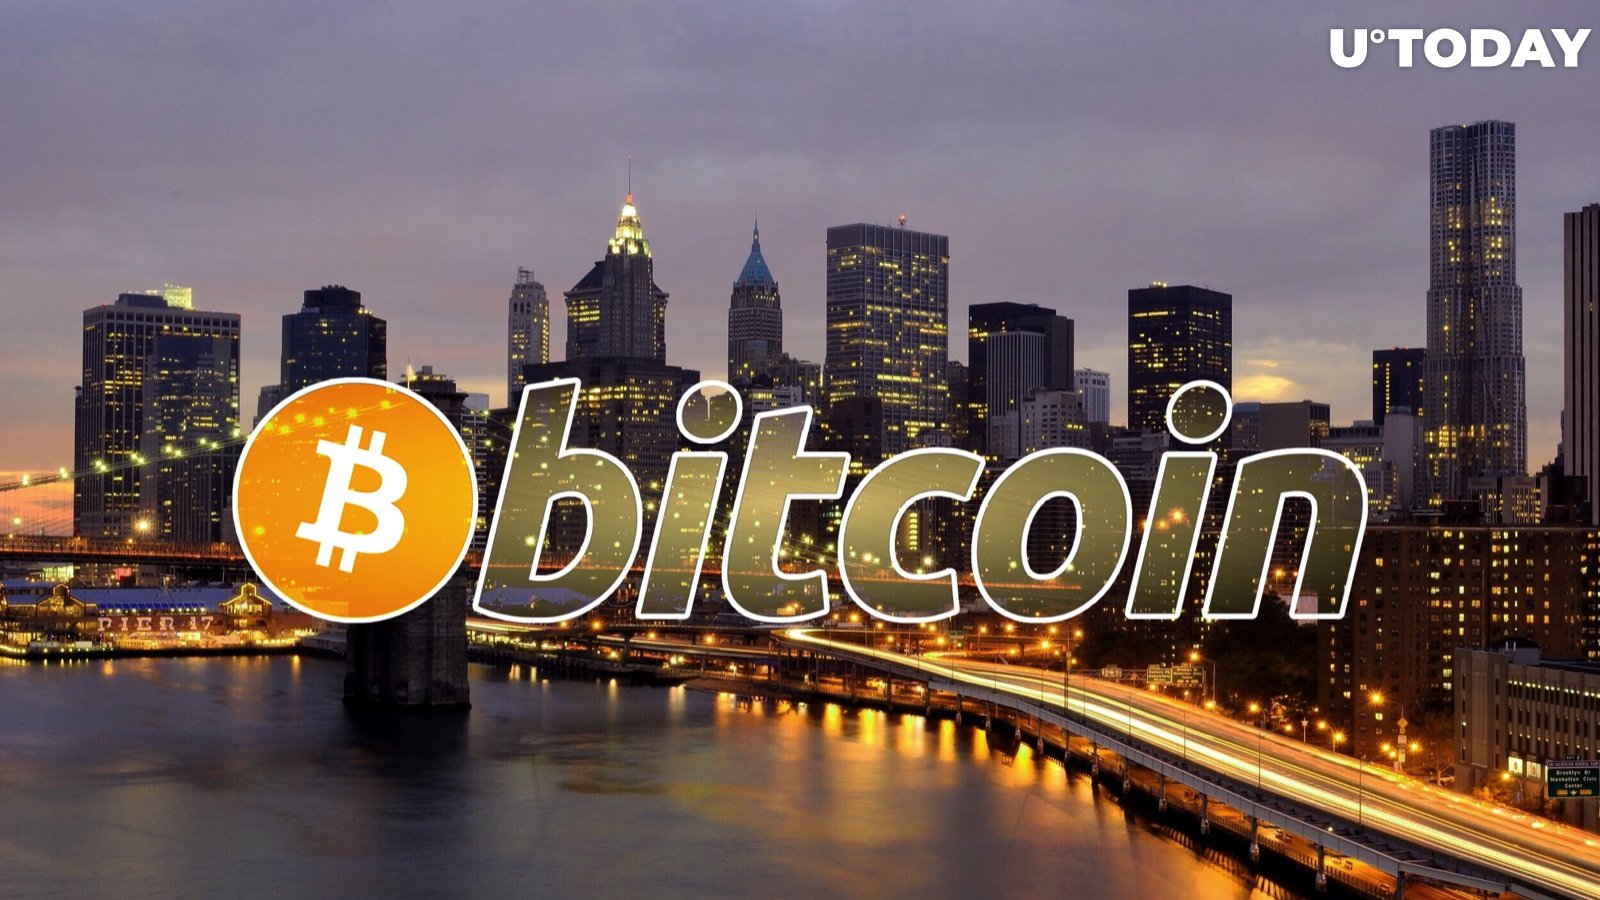 Bloomberg: Bakkt May Seek License from NY Regulators to Let Bitcoin Go Mainstream